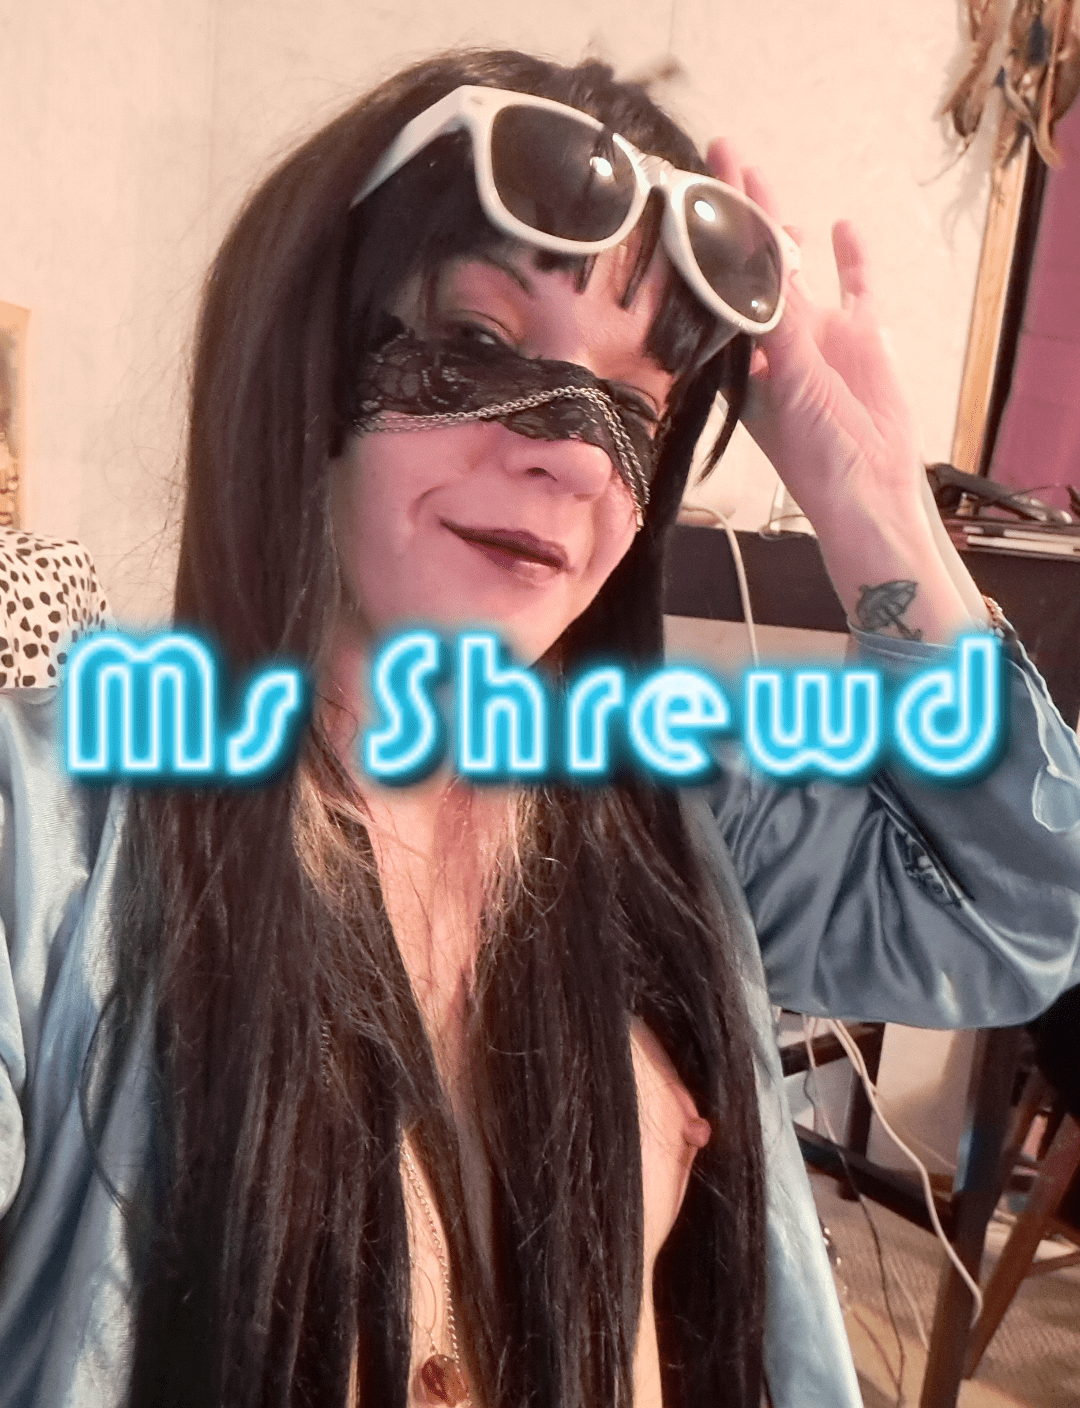 Cover photo of MsShrewd